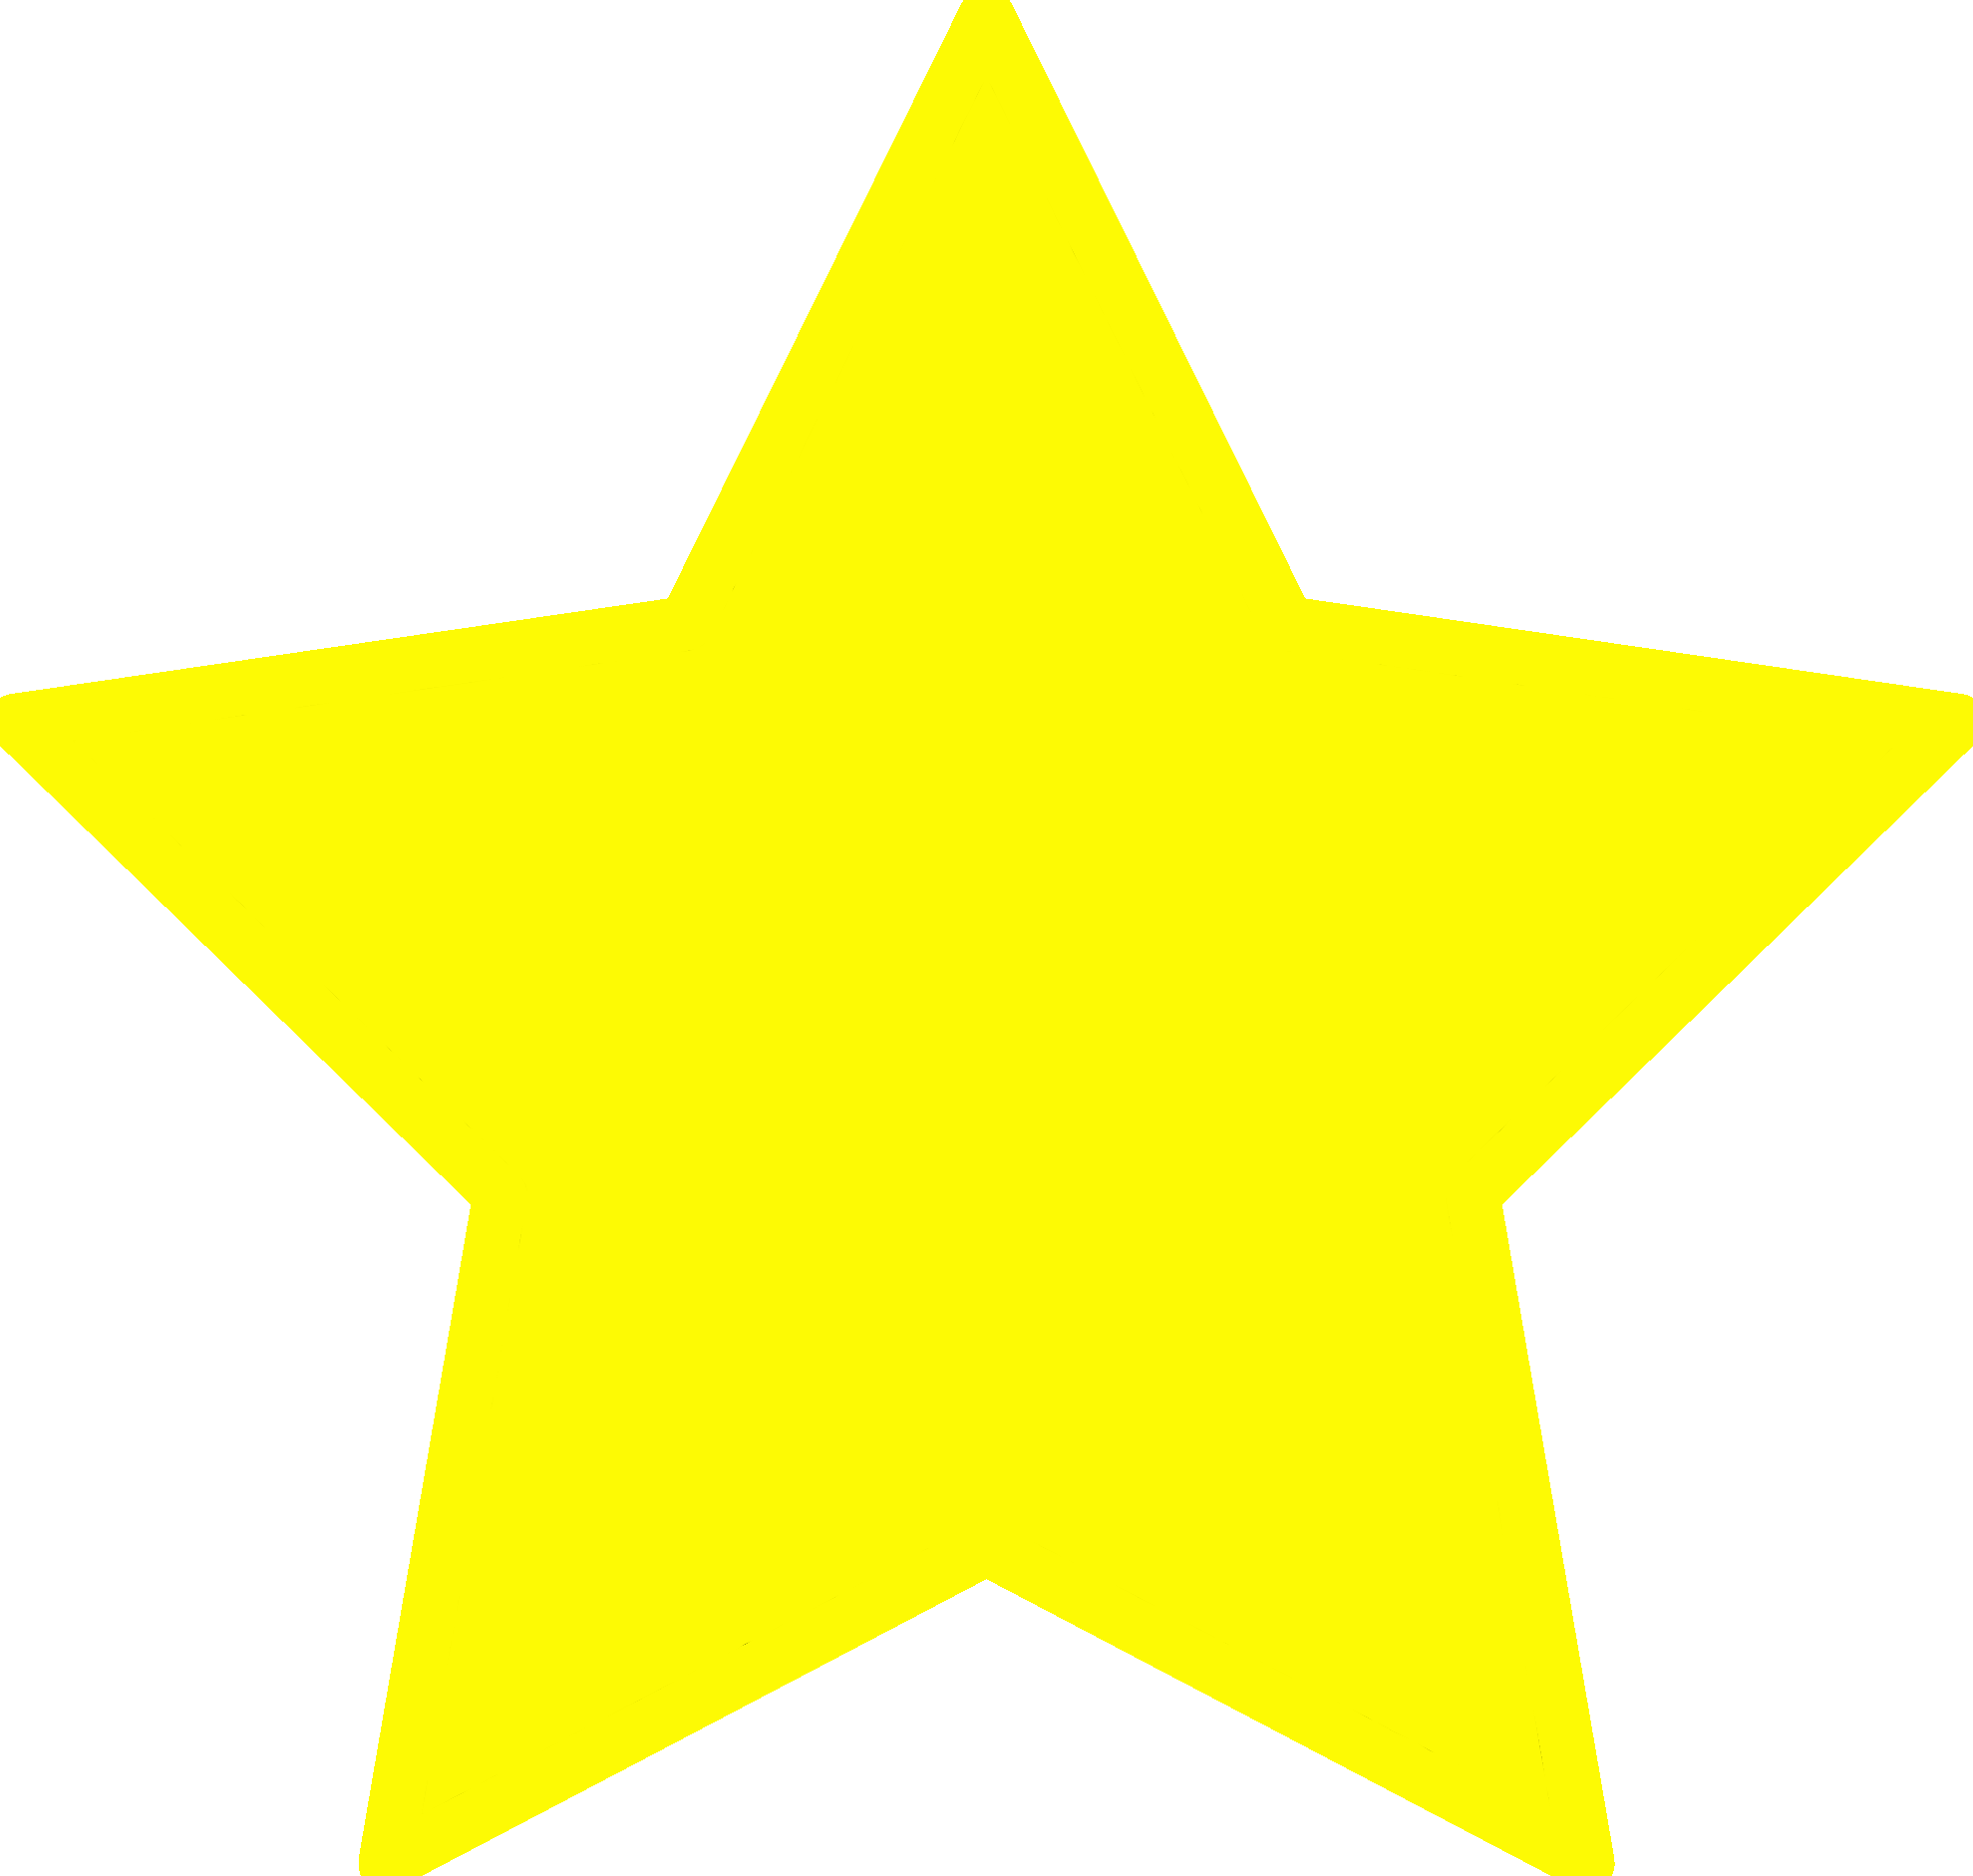 Blackâ??Star | Soul Eater Wiki | Fandom powered by Wikia